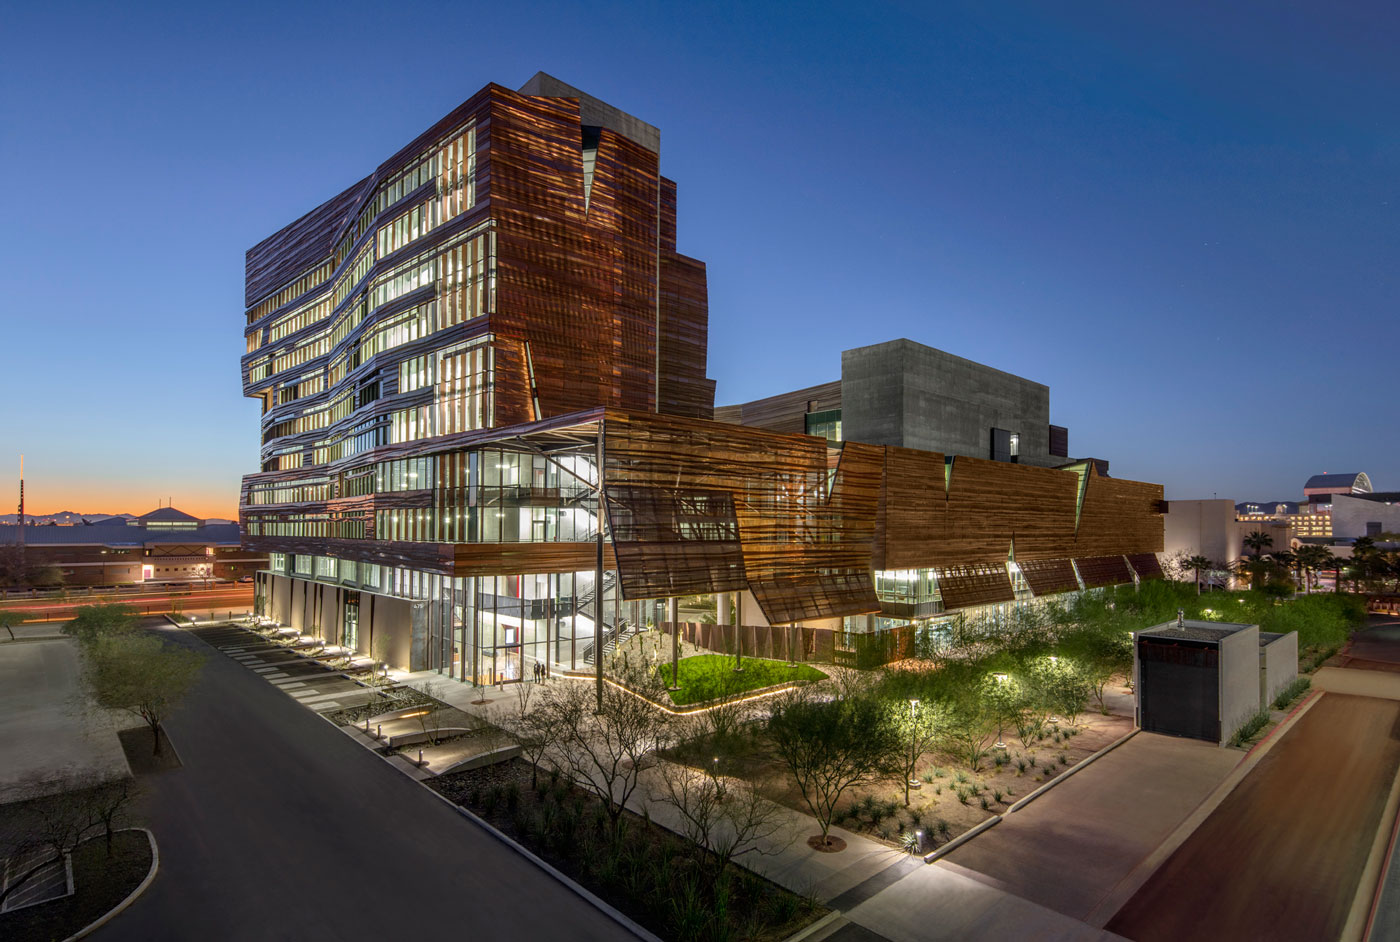 University of Arizona Biosciences Partnership Building - Image 03